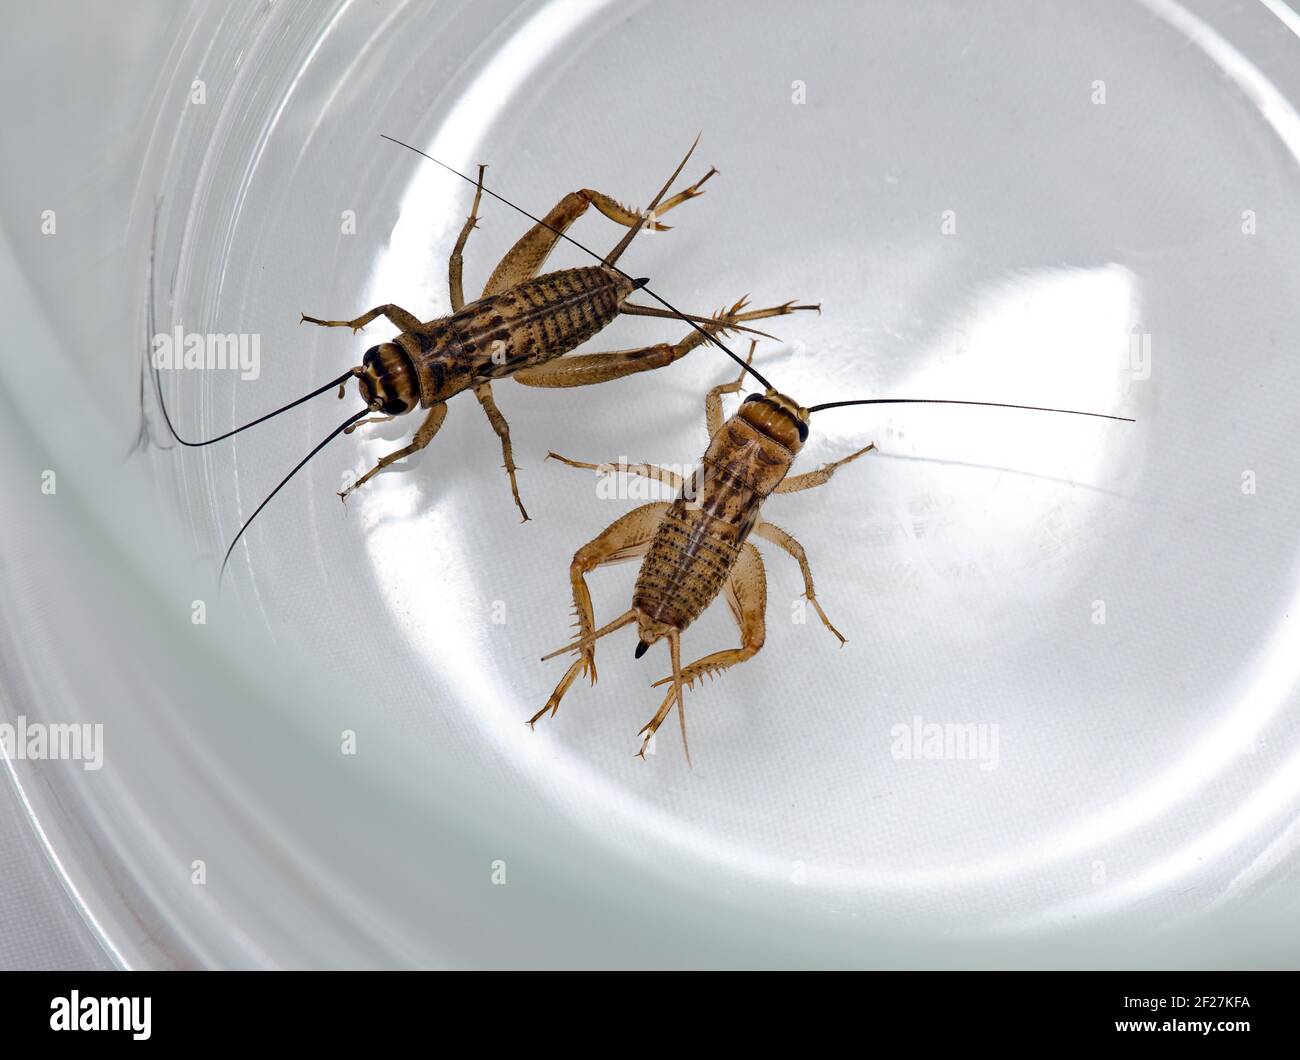 Two crickets creep in a glass mug Stock Photo